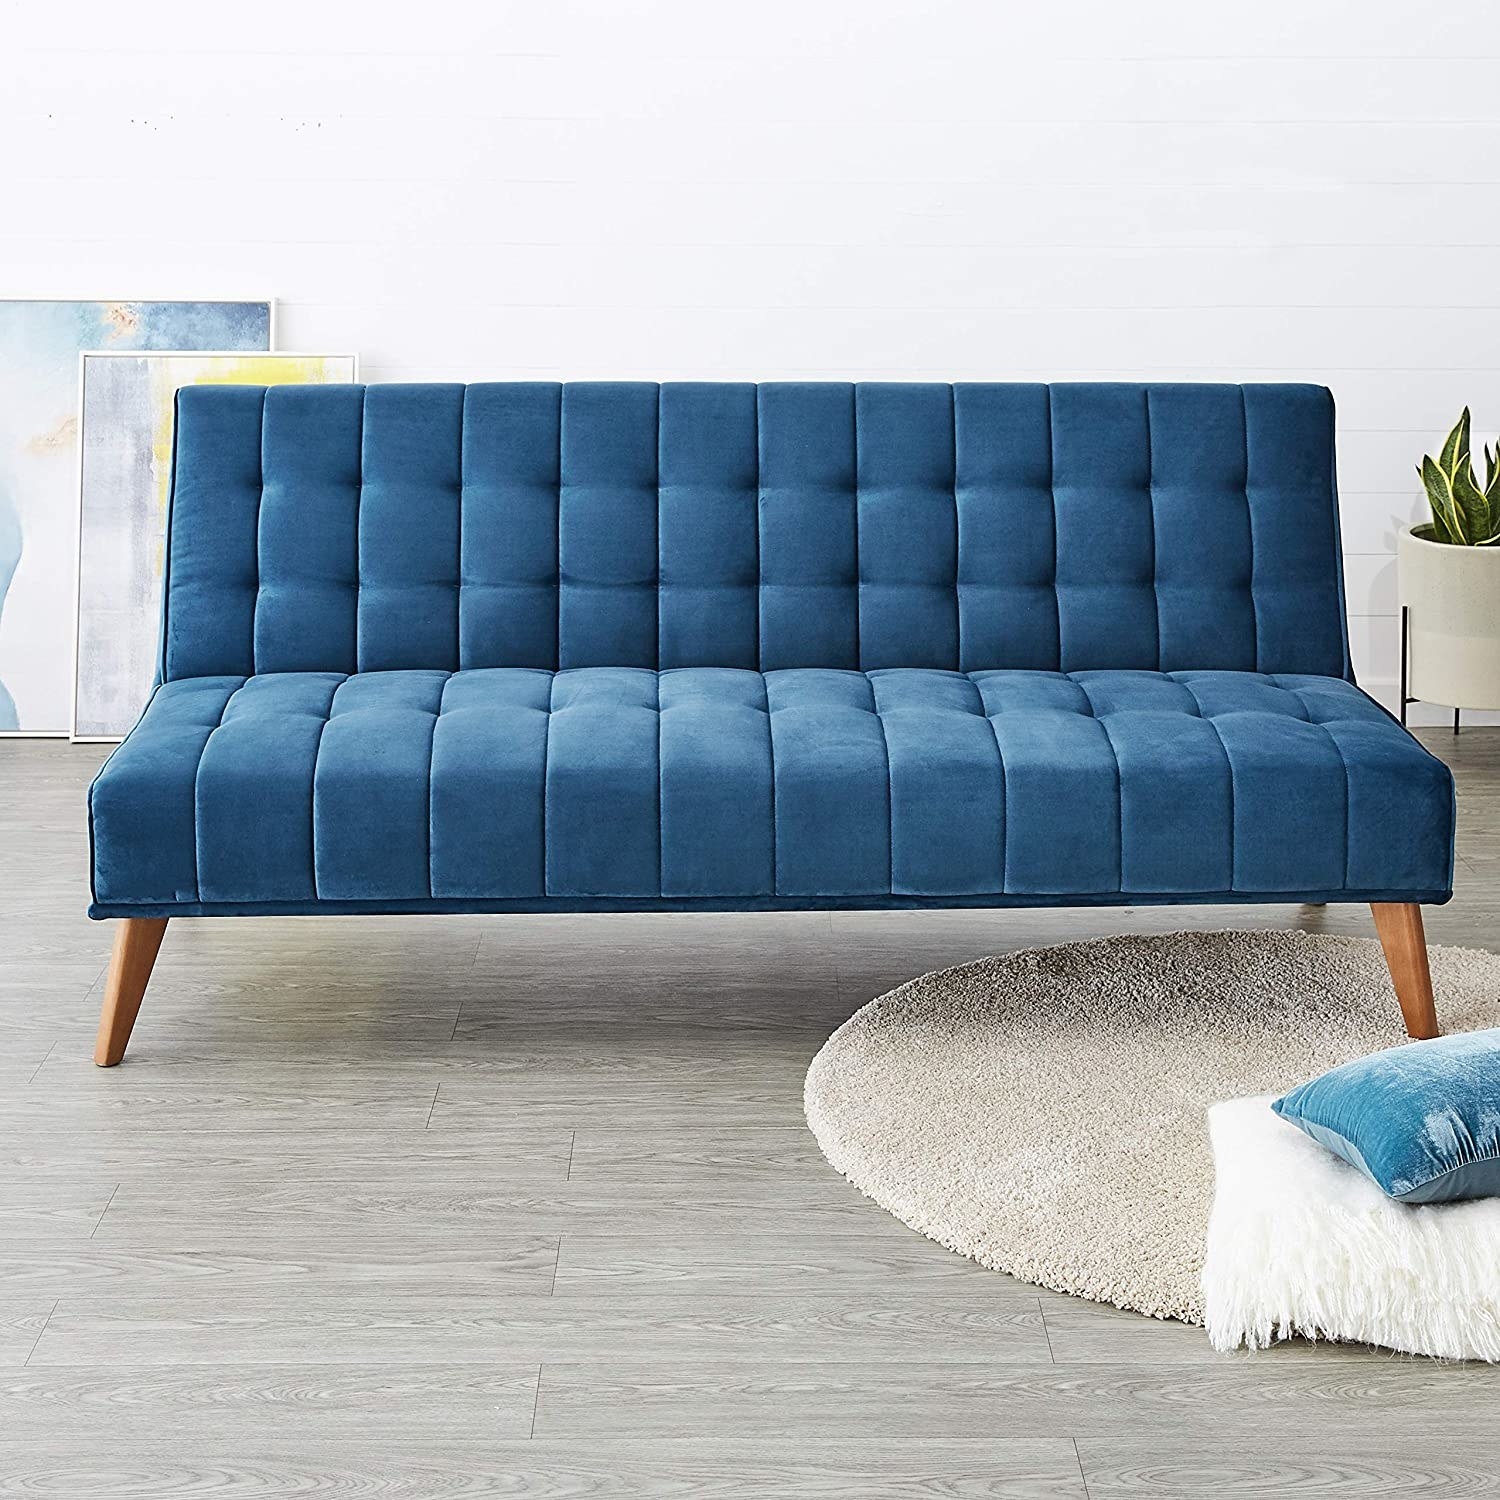 A three-seater blue sofa cum bed